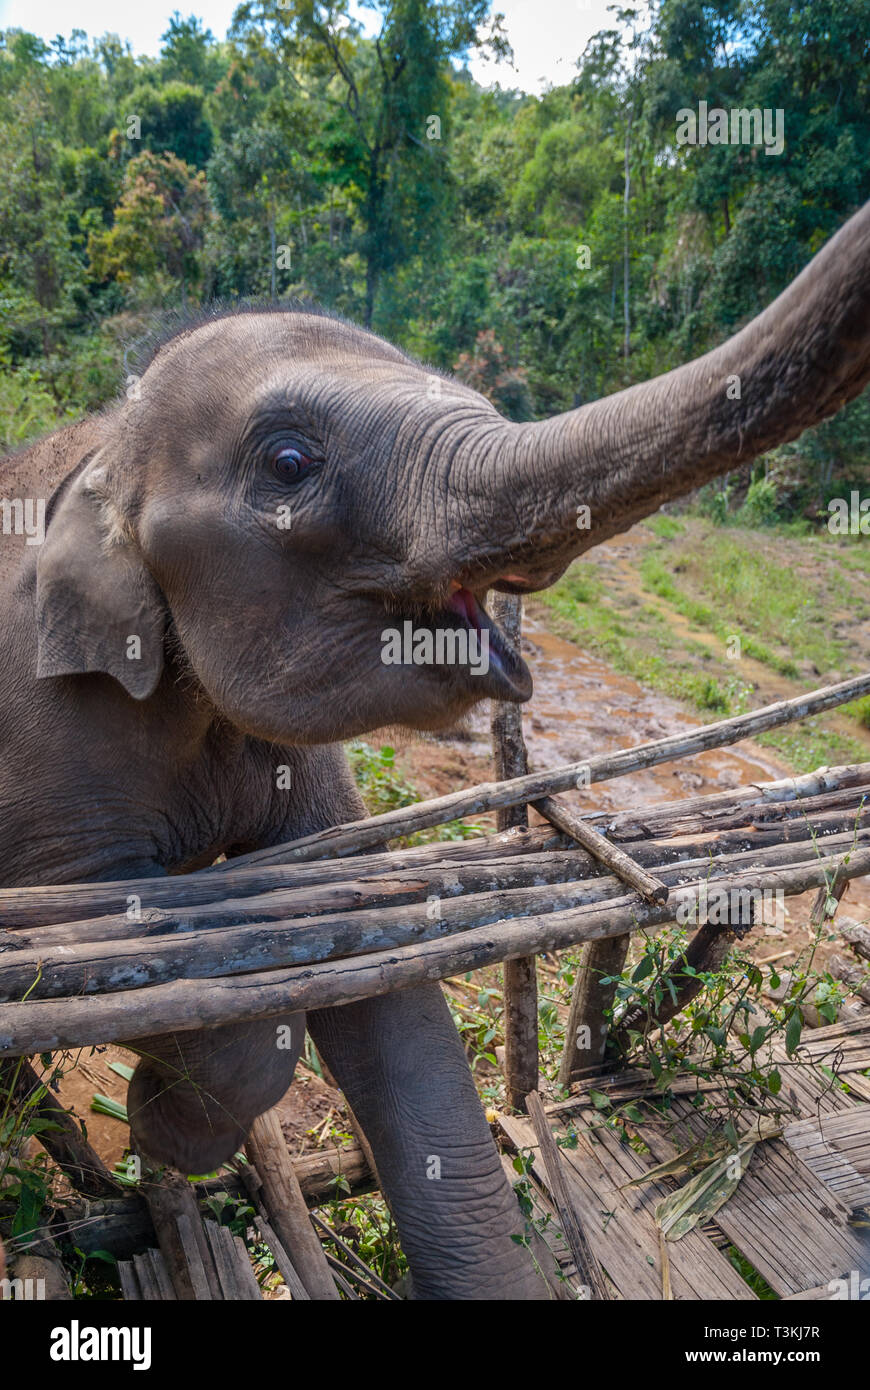 Feeding baby elephant with bananas, elephant sanctuary, Thailand Stock Photo